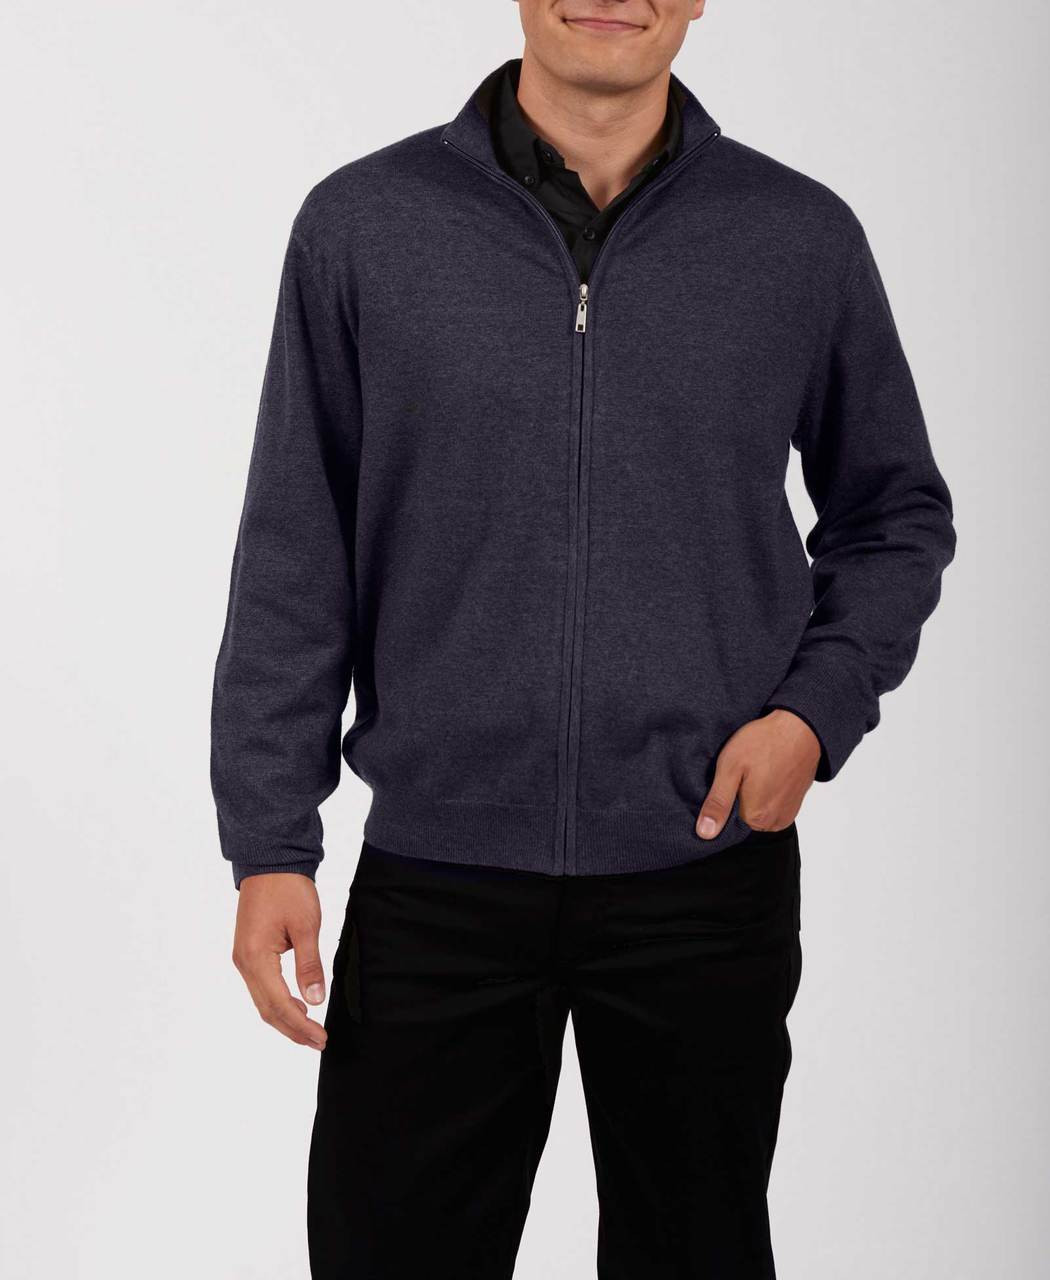 Men's Full Zip Cardigan Sweater